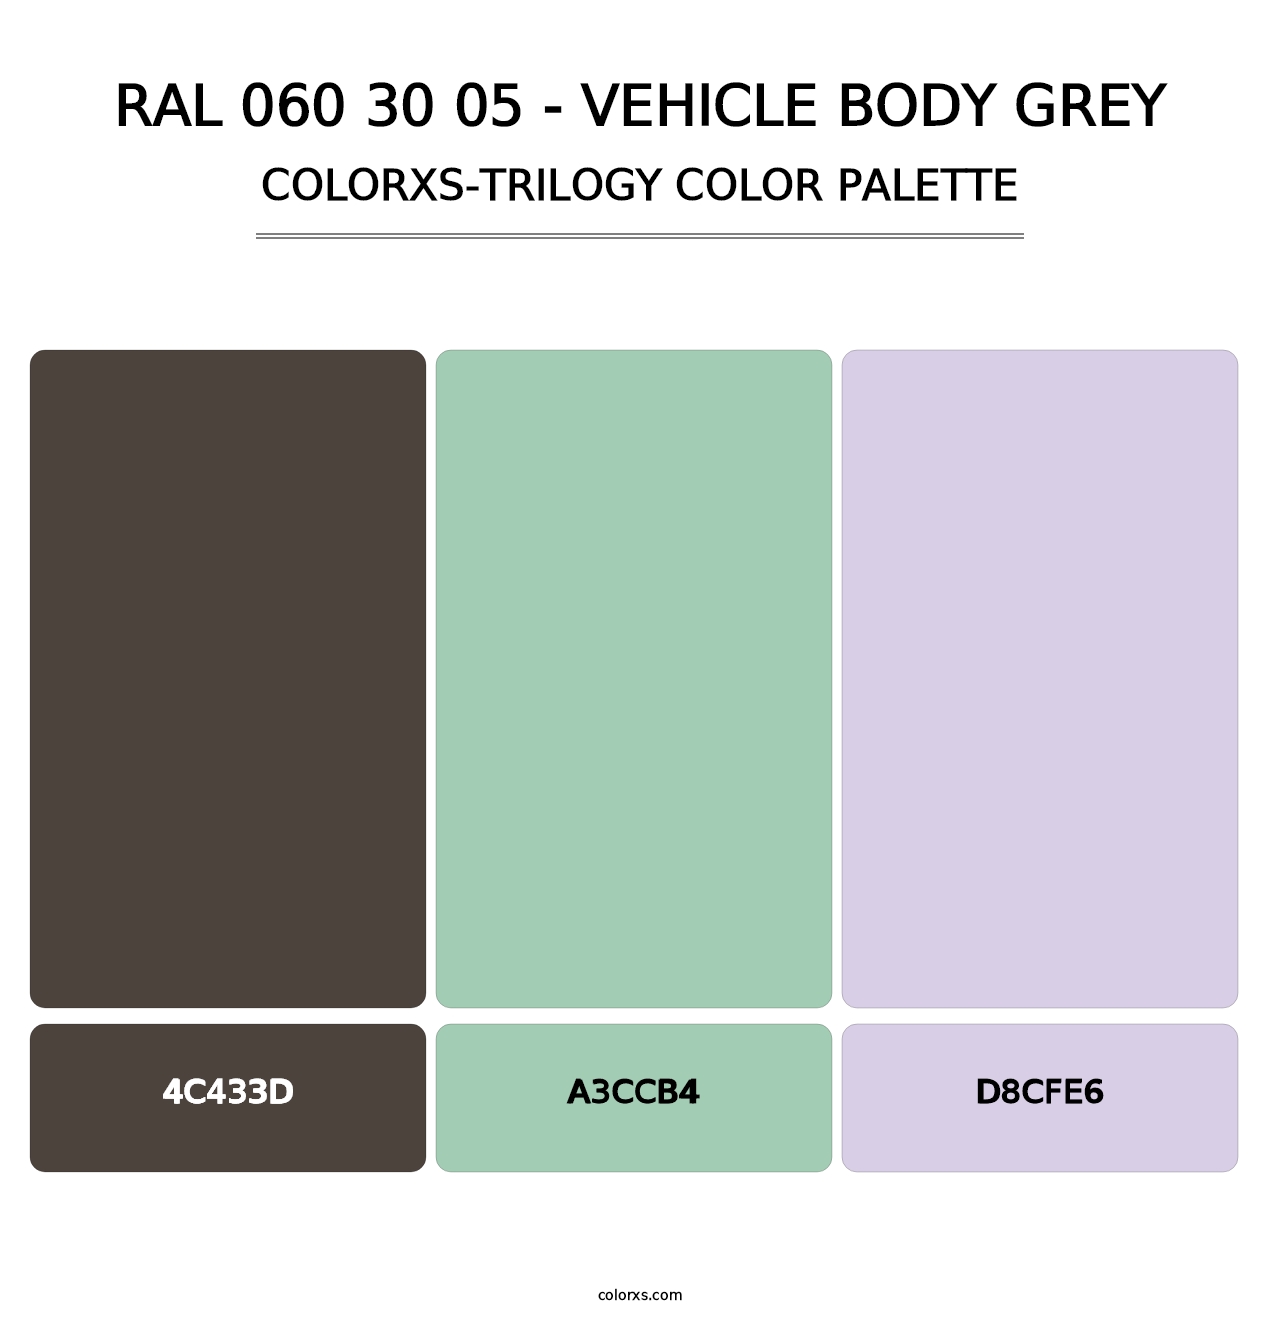 RAL 060 30 05 - Vehicle Body Grey - Colorxs Trilogy Palette